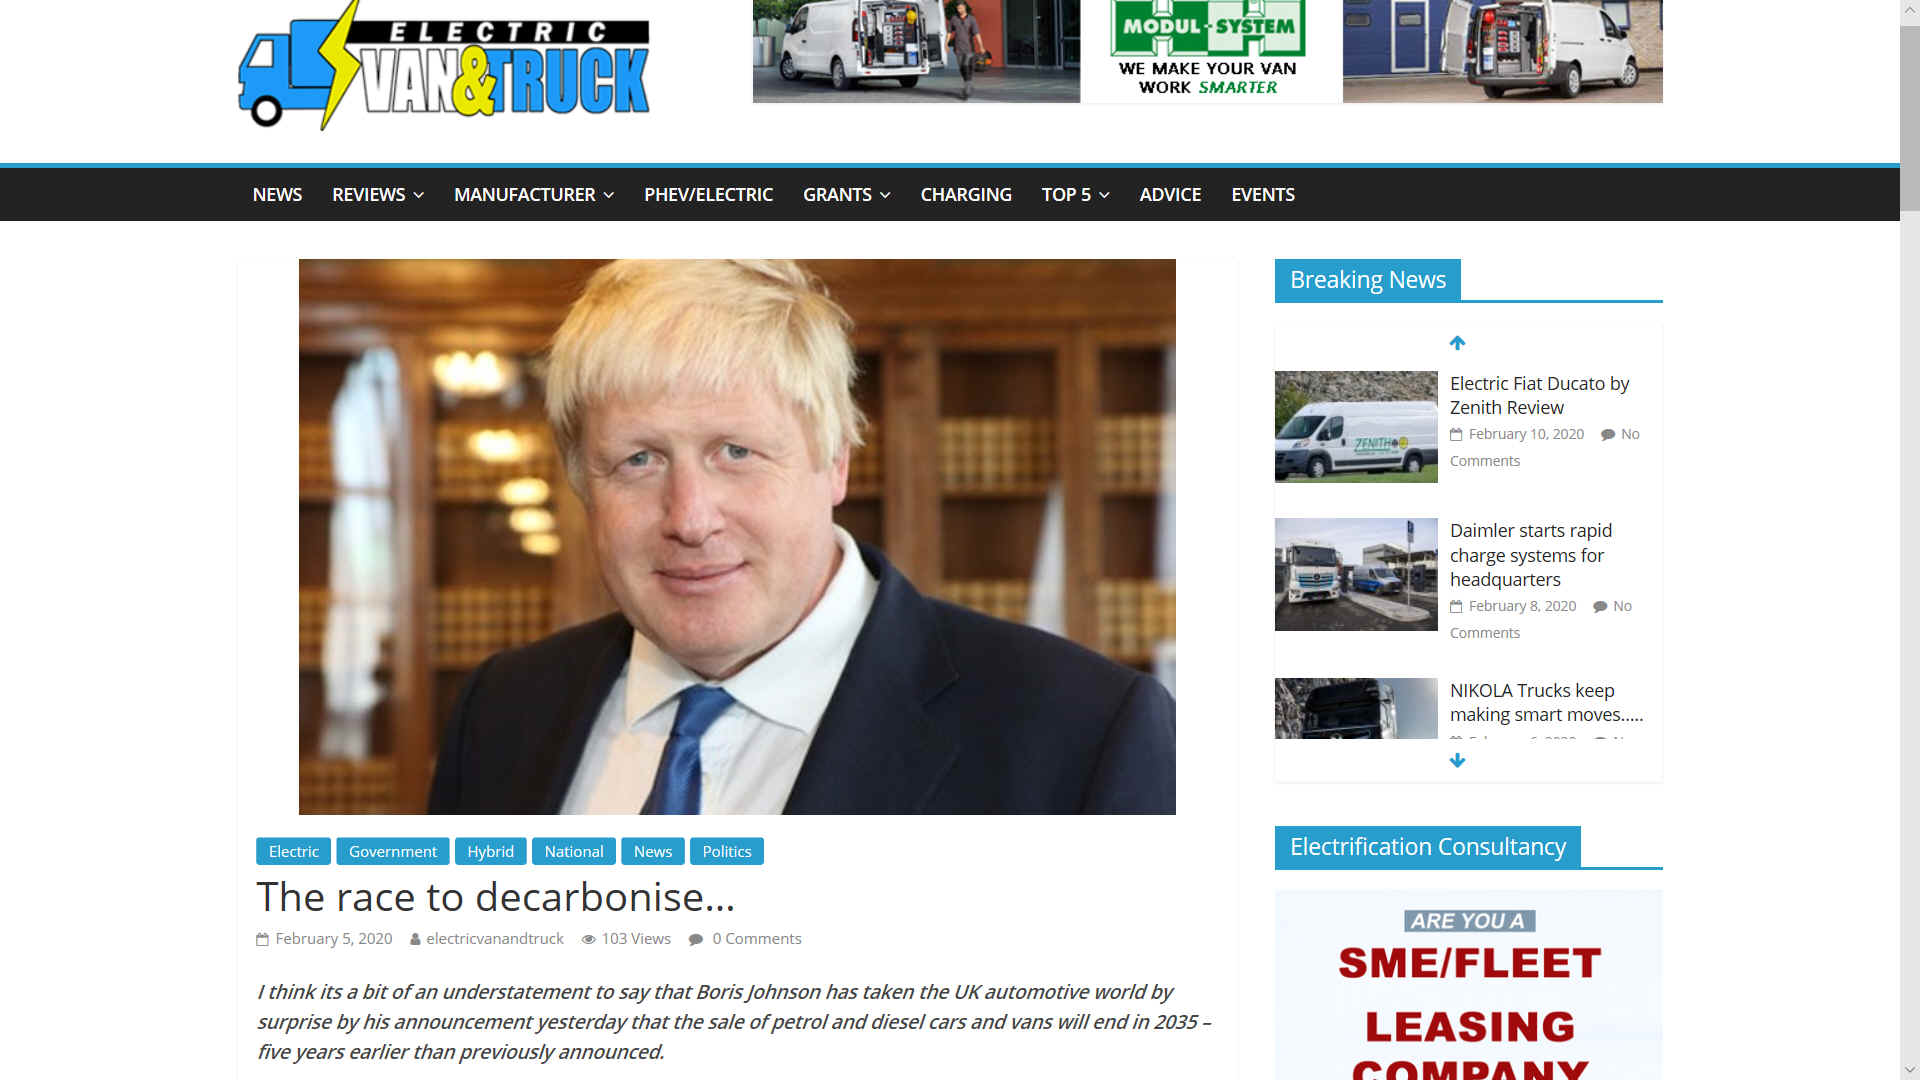 Boris Johnson is an electric vehicle advocate